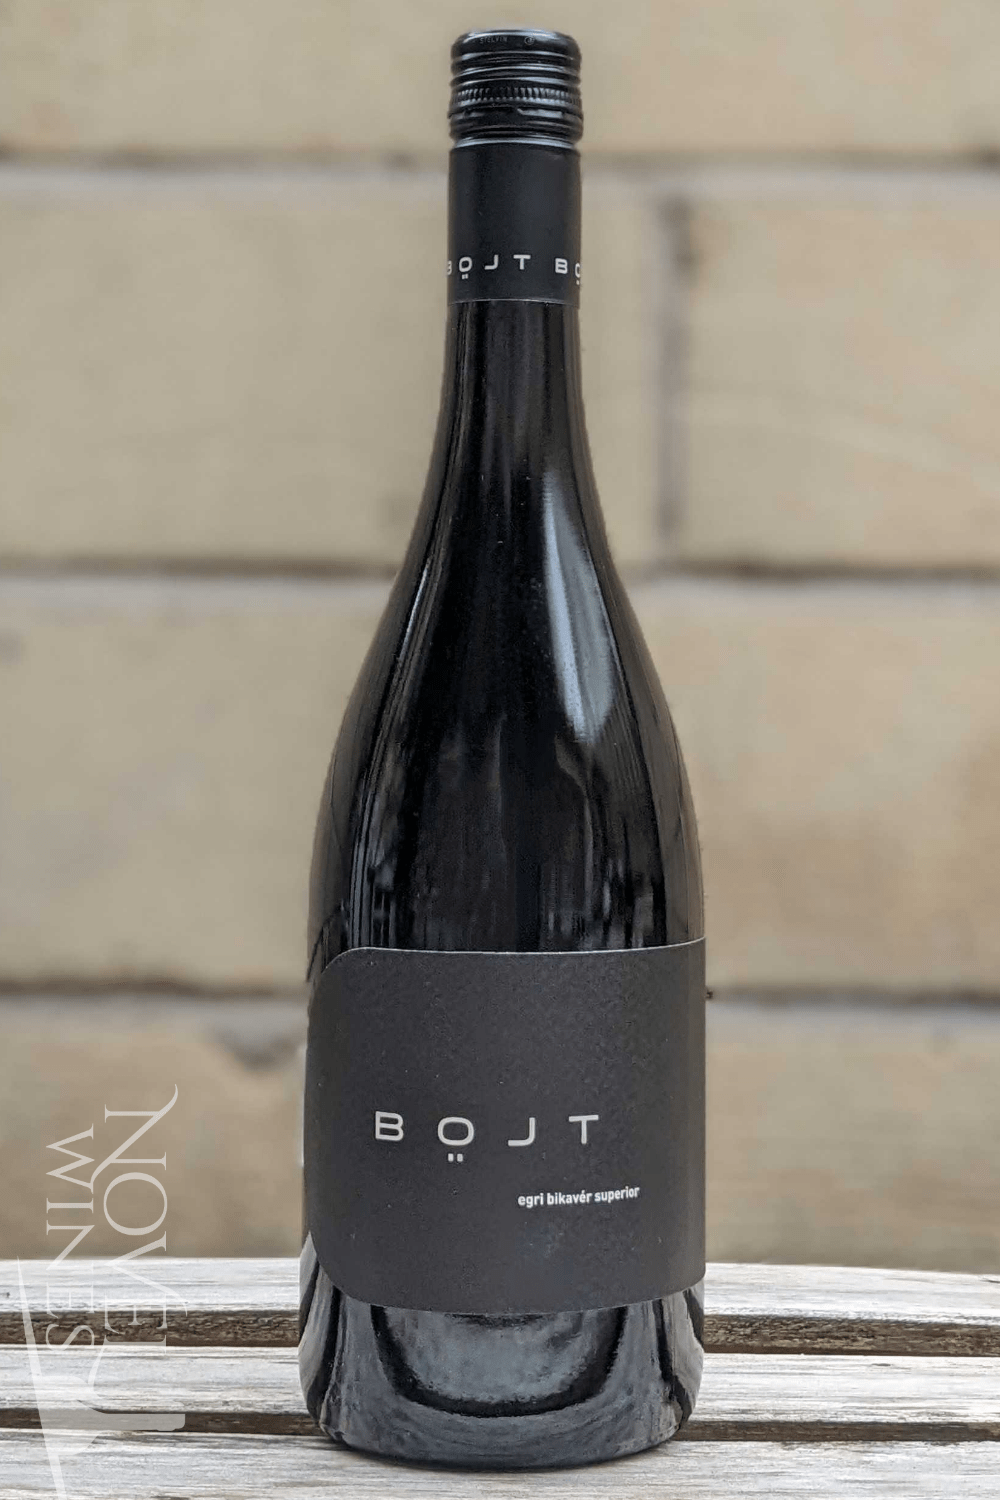 Bojt Red Wine Böjt Egri Bikaver Superior 2019, Hungary